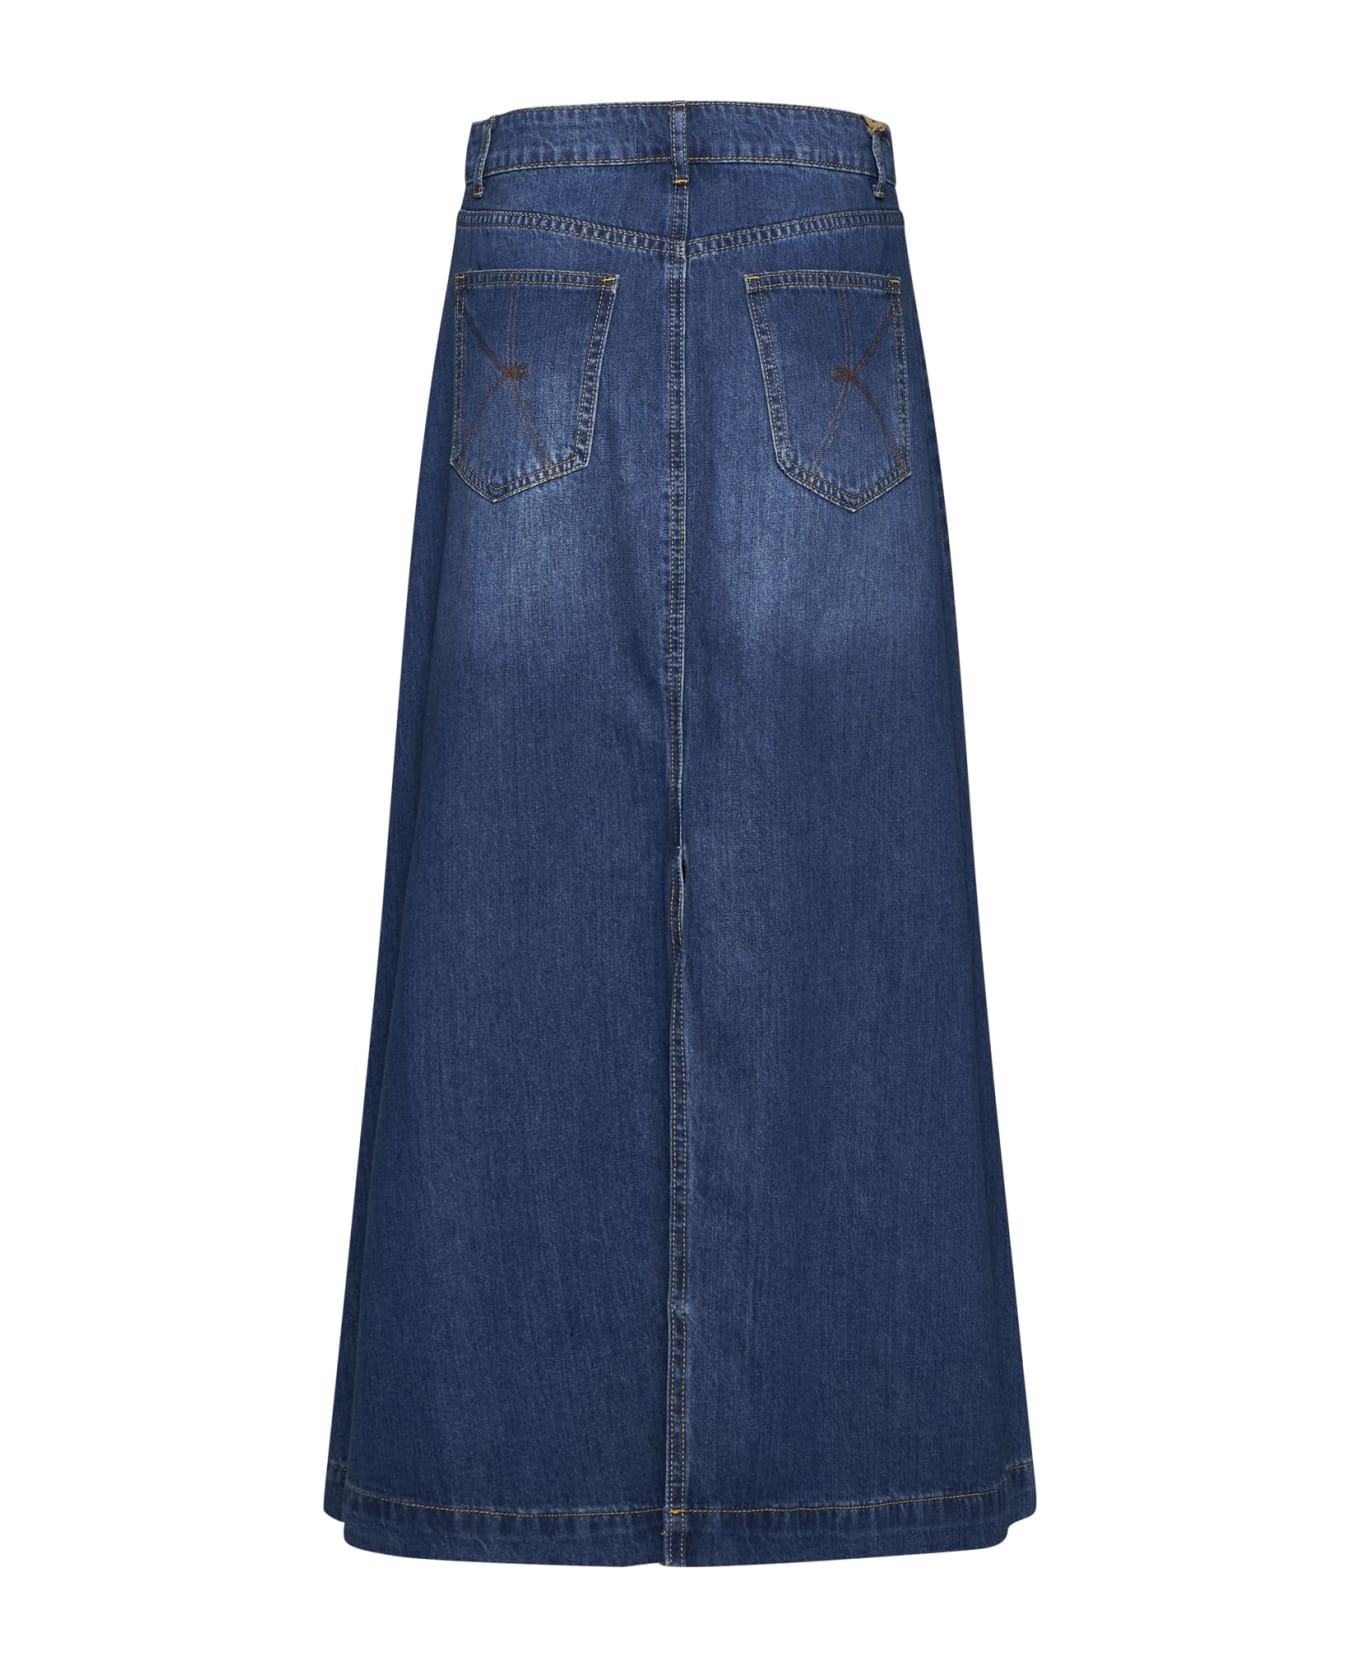 Kaos Skirt - Jeans medio